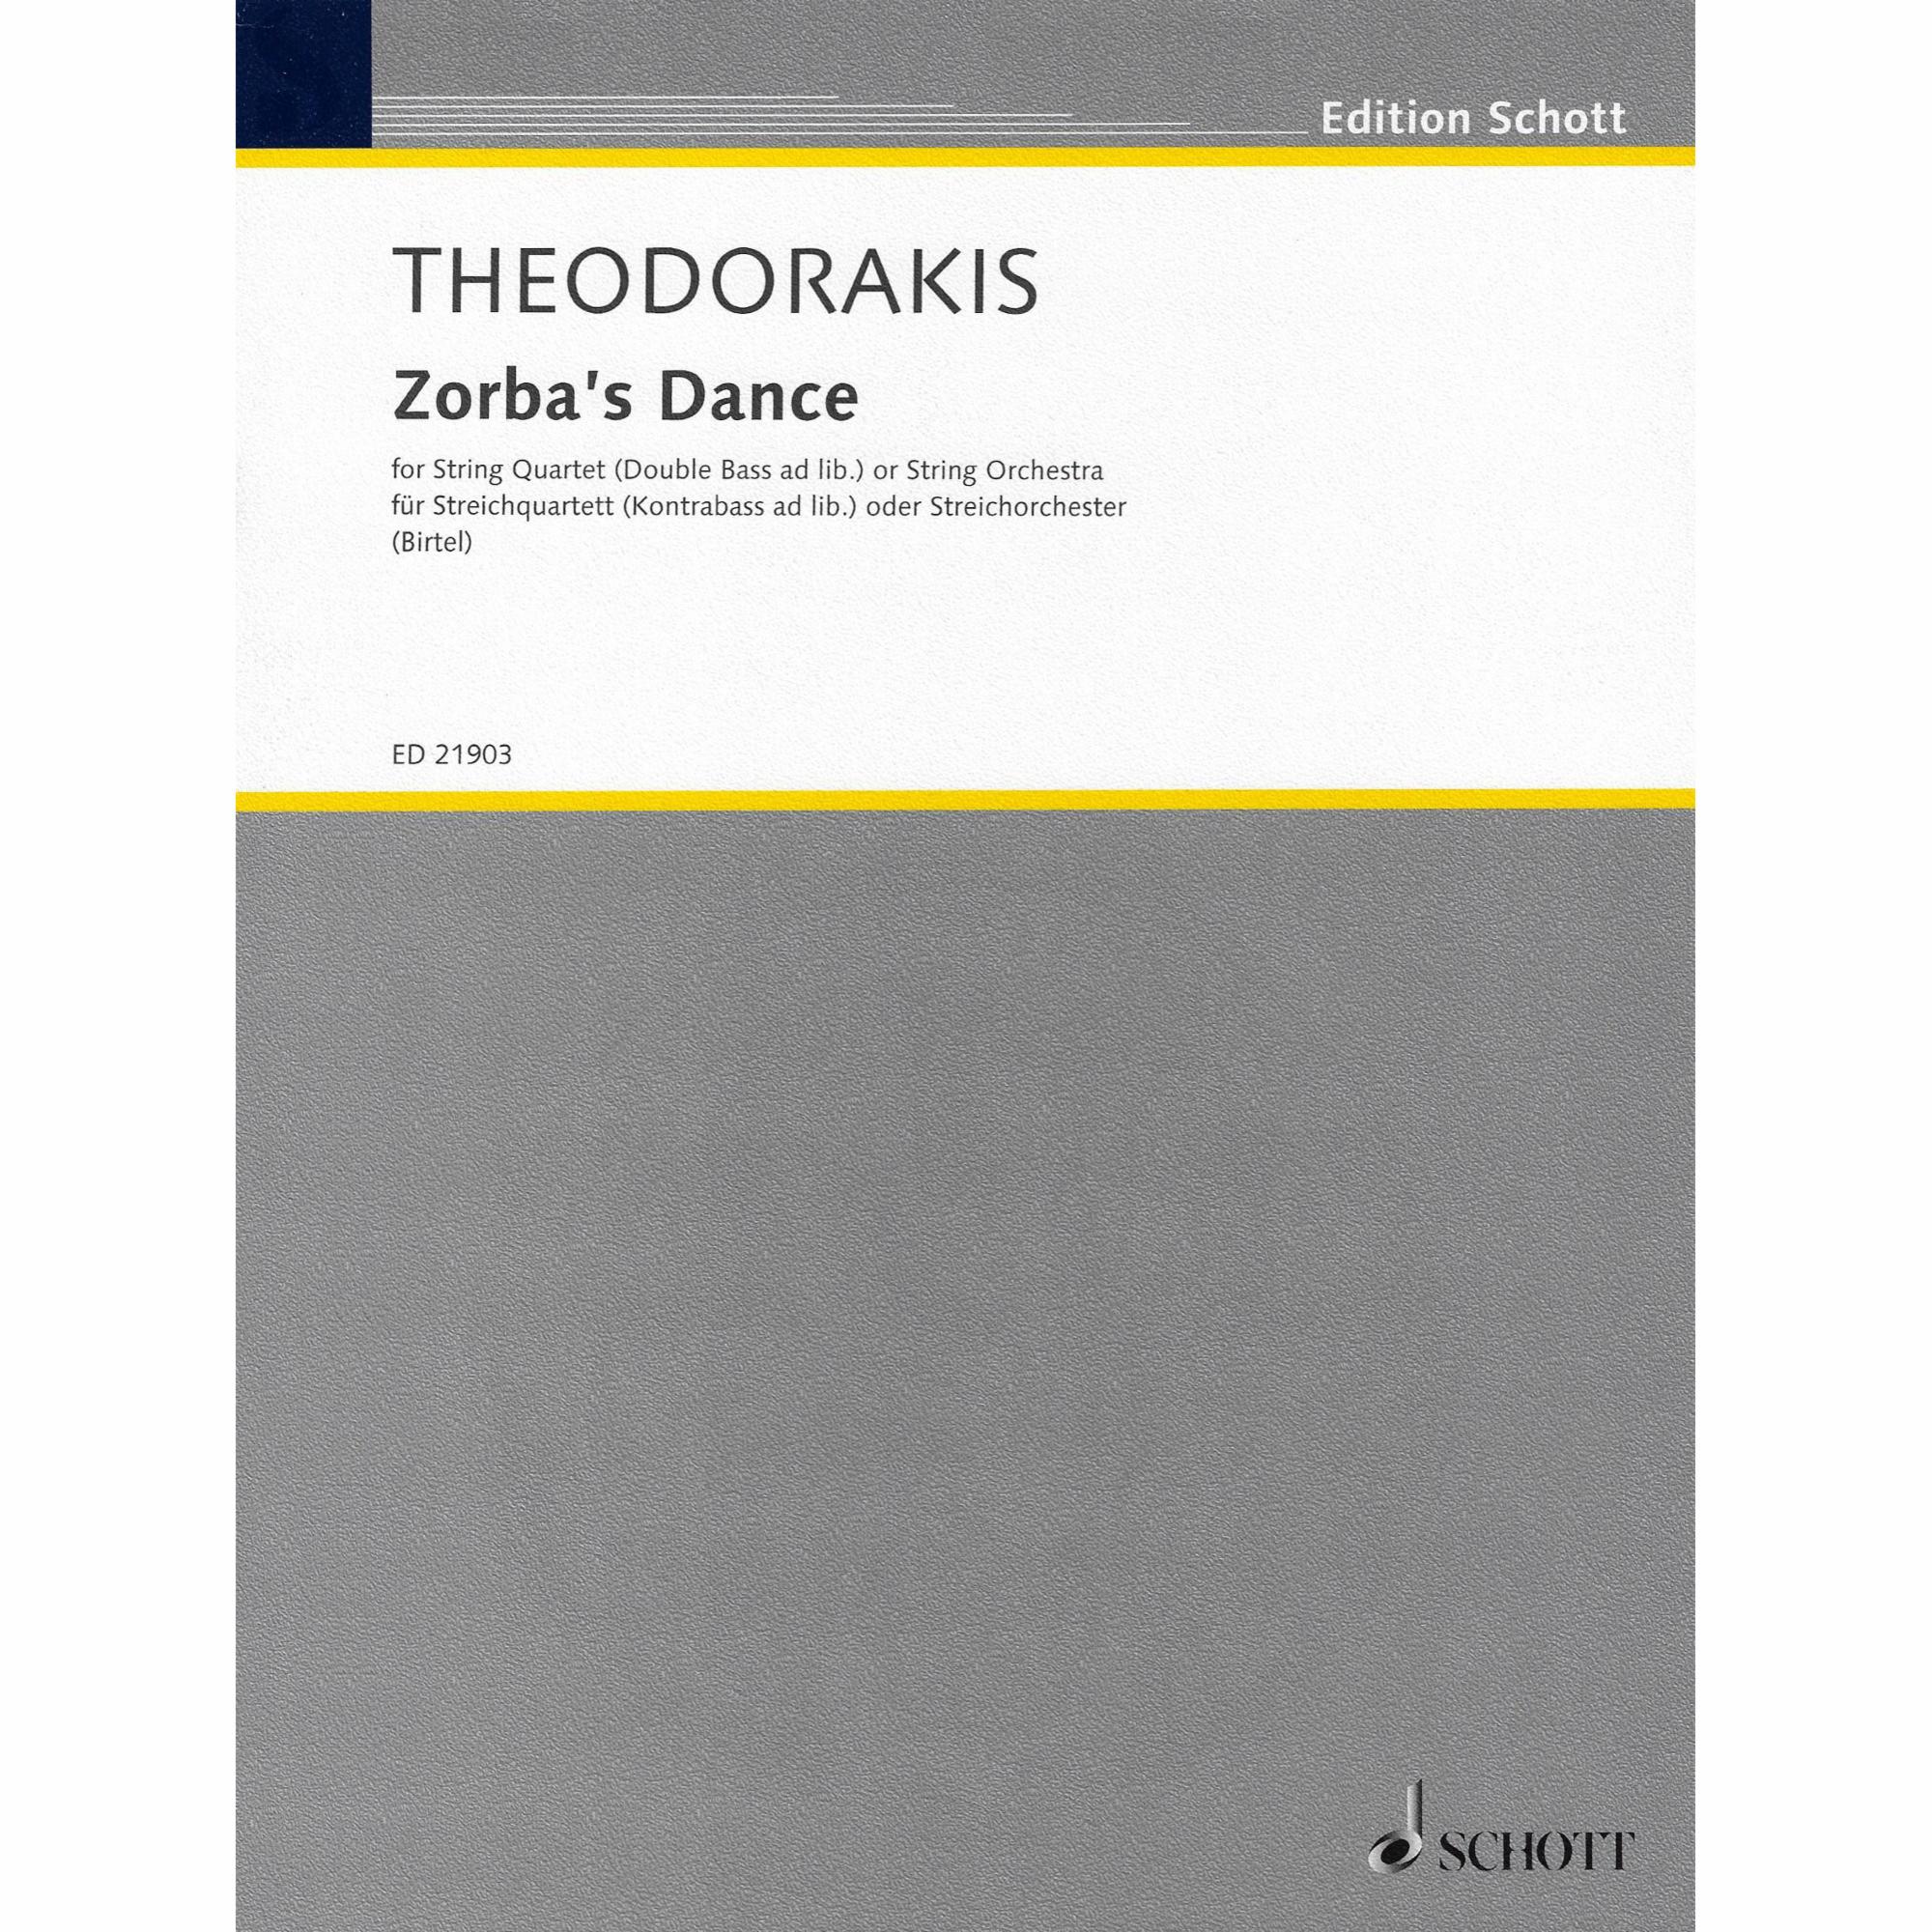 Theodorakis -- Zorba's Dance for String Quartet